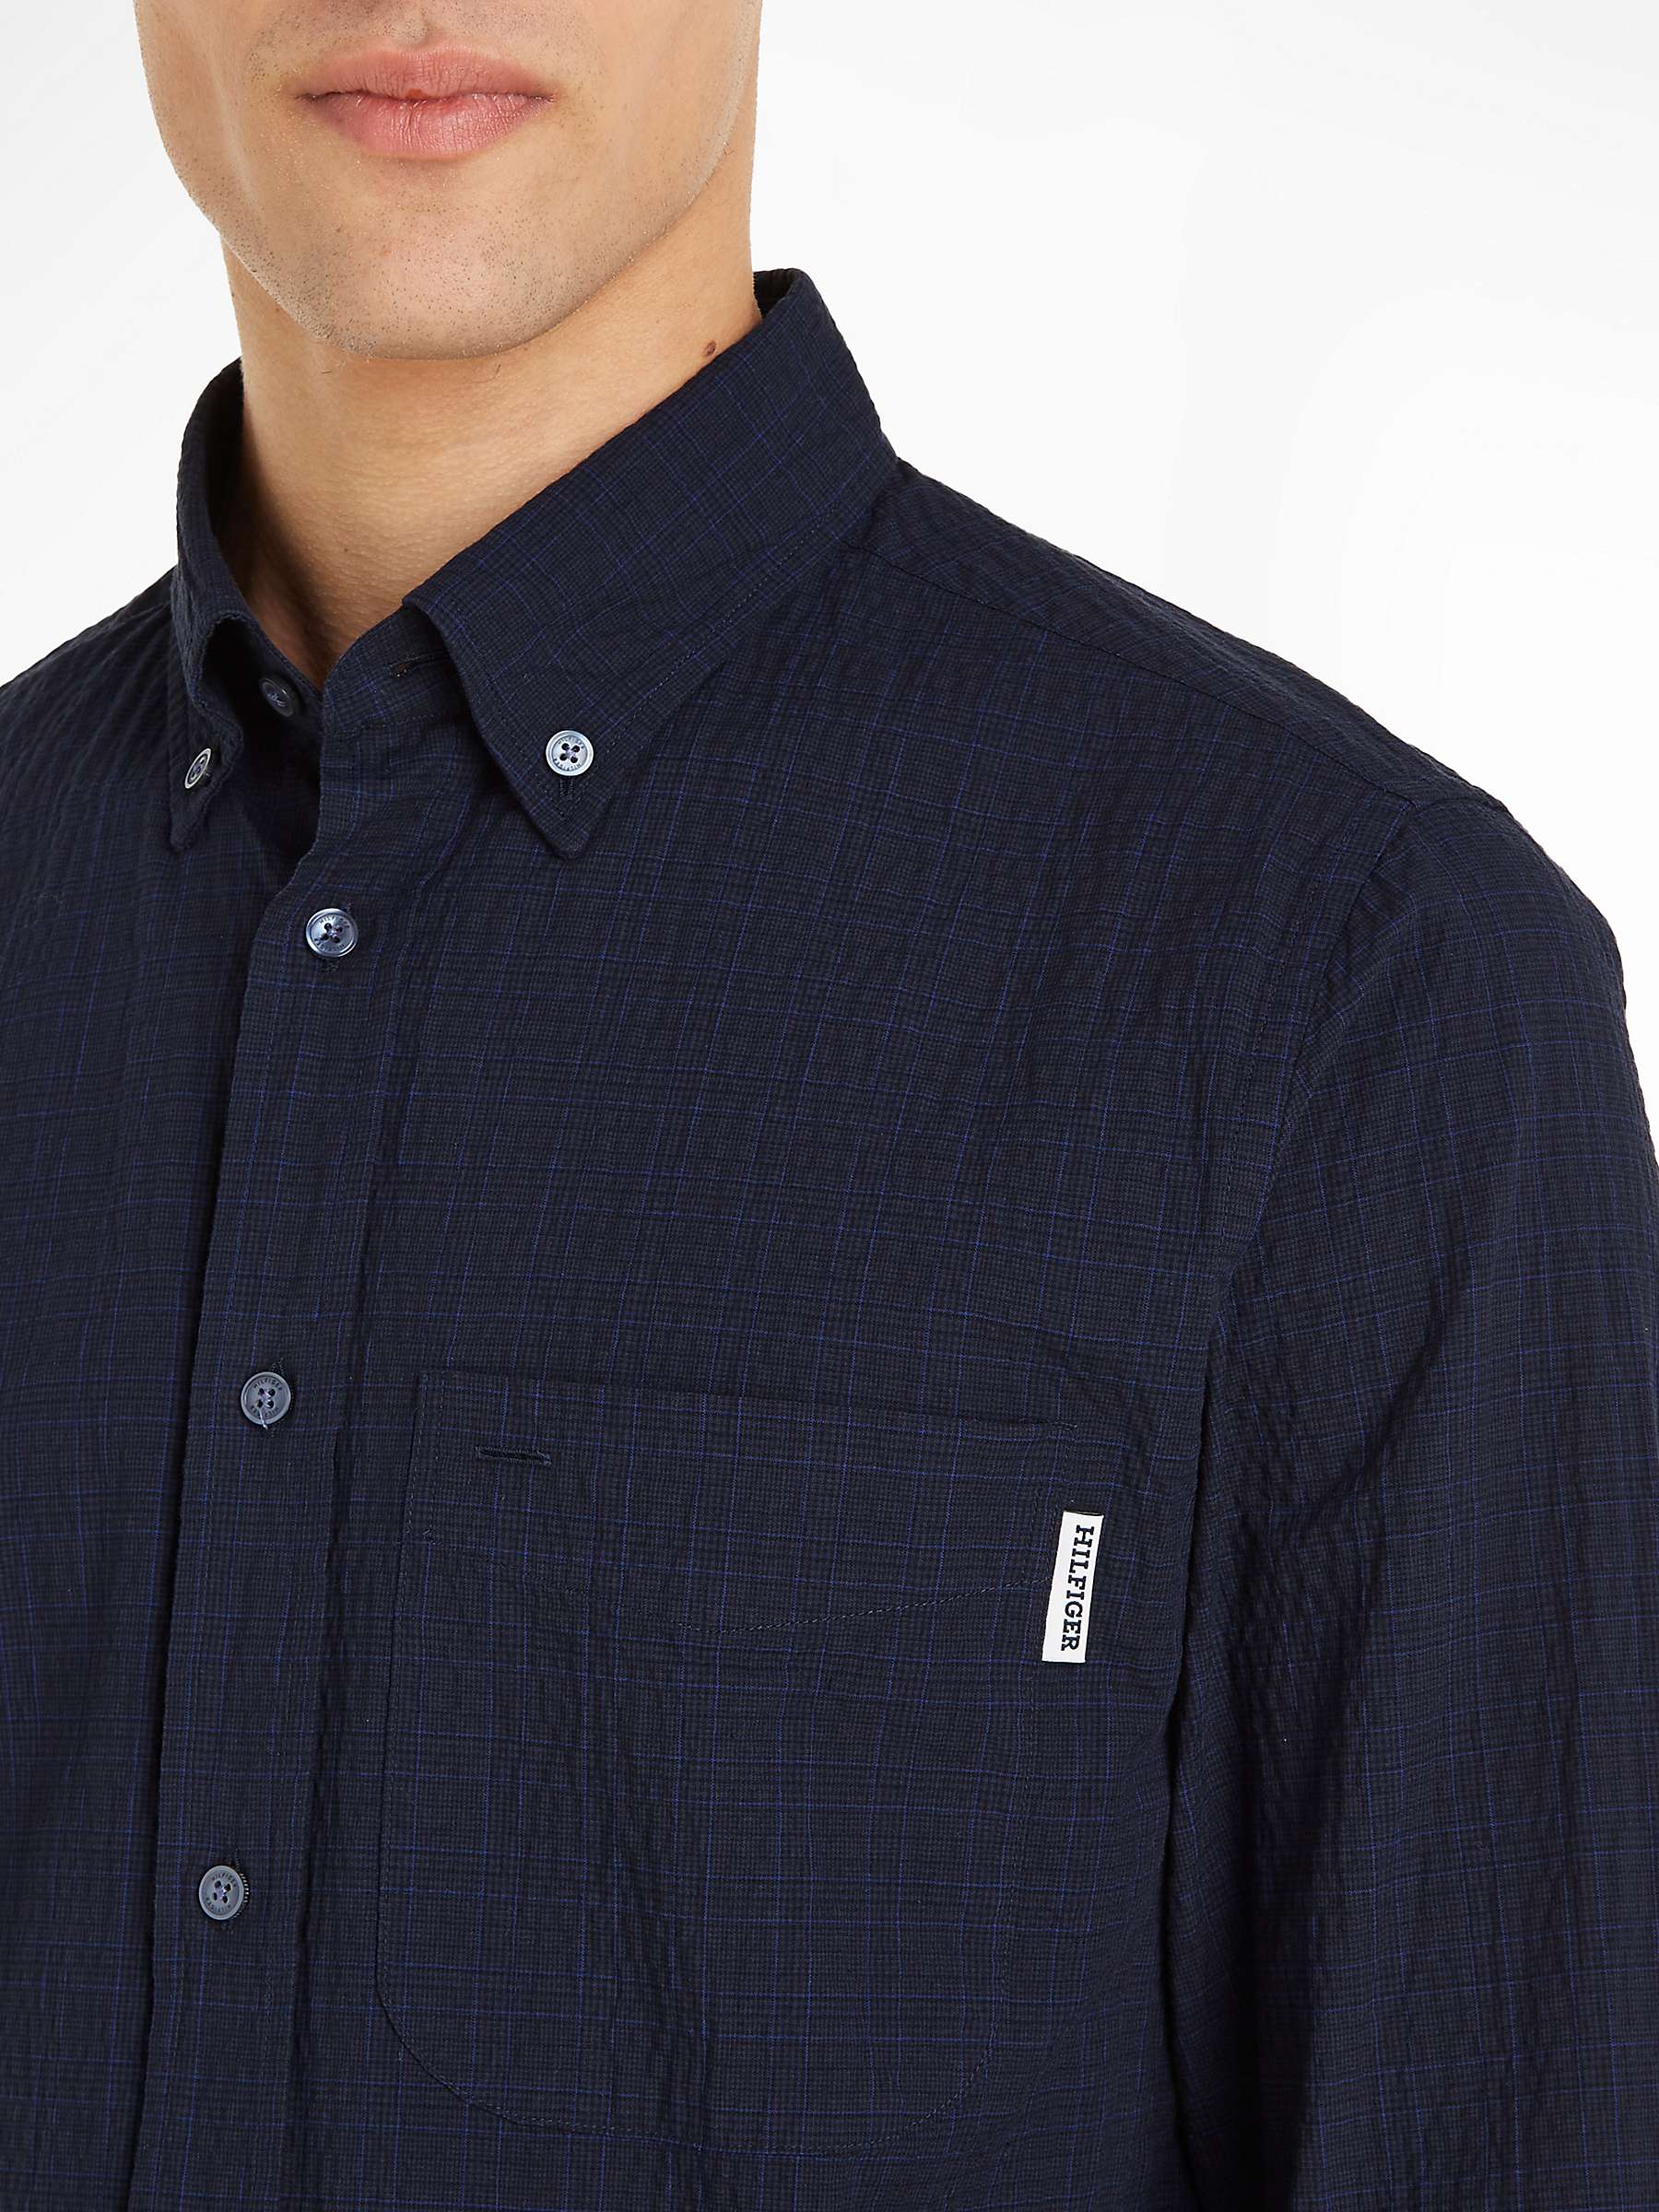 Buy Tommy Hilfiger Textured Long Sleeve Check Shirt, Desert Sky Online at johnlewis.com